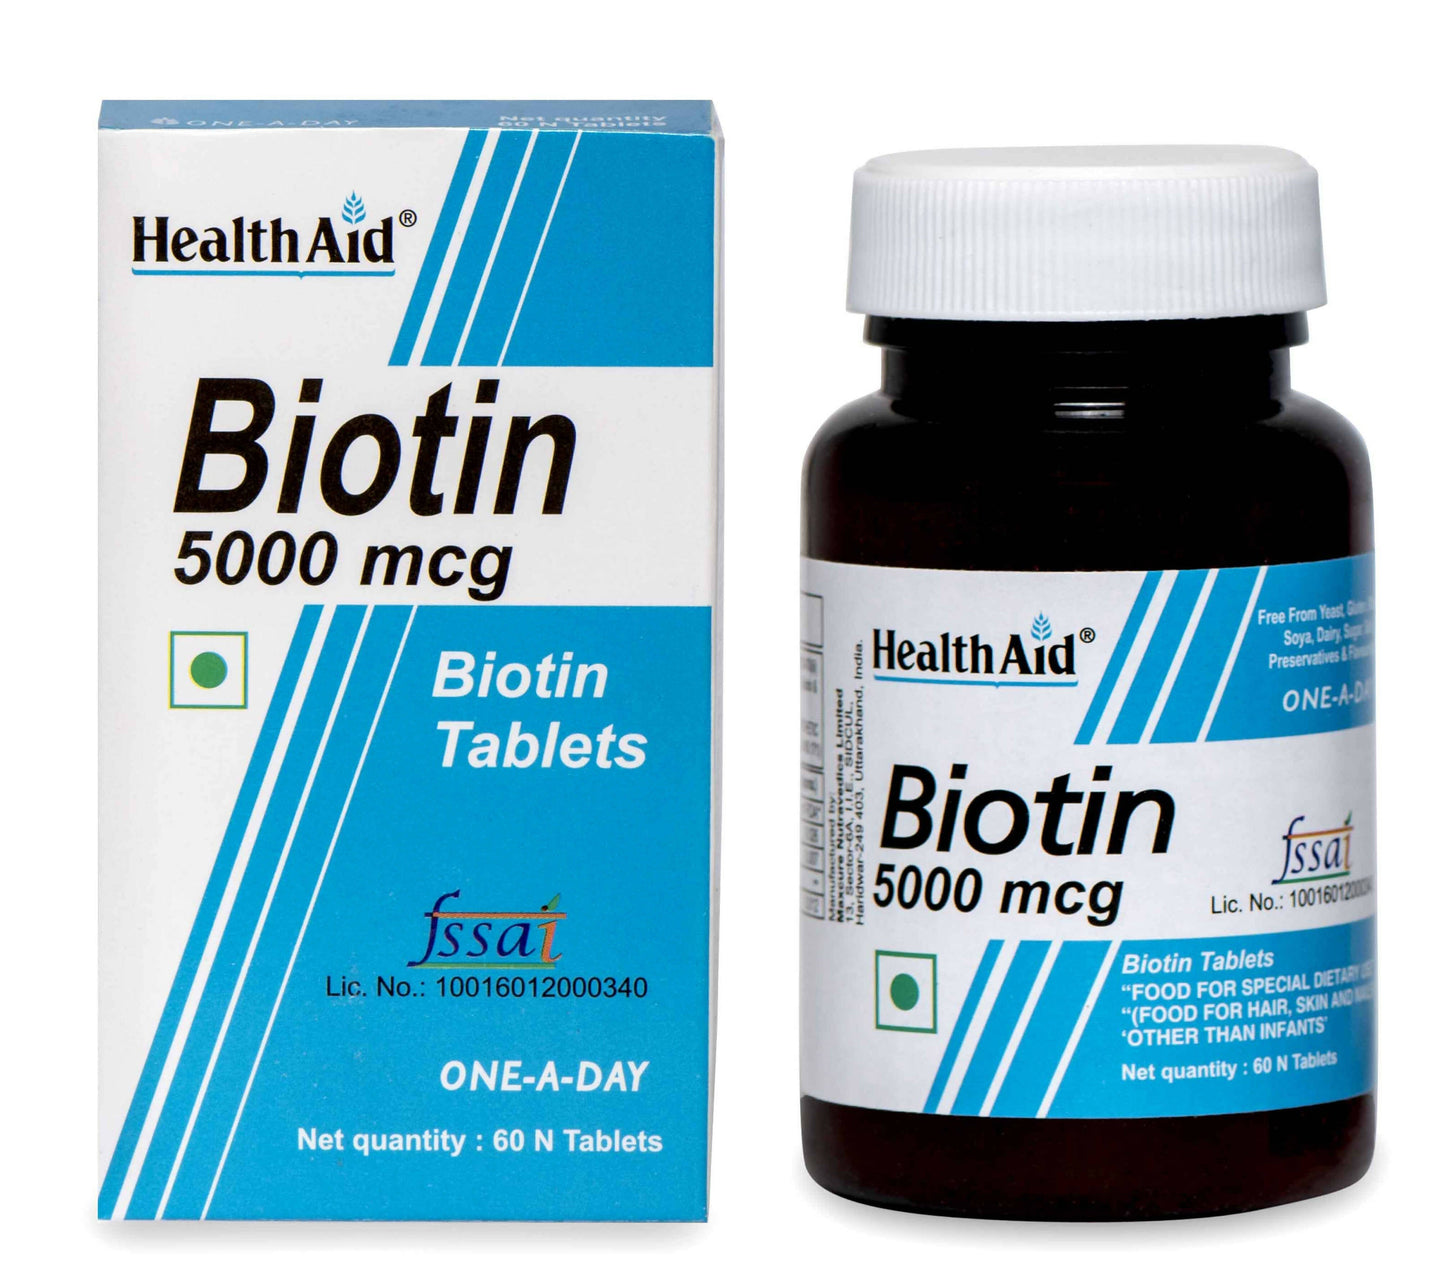 HealthAid Biotin 5000 mcg Tablets - BUDEN